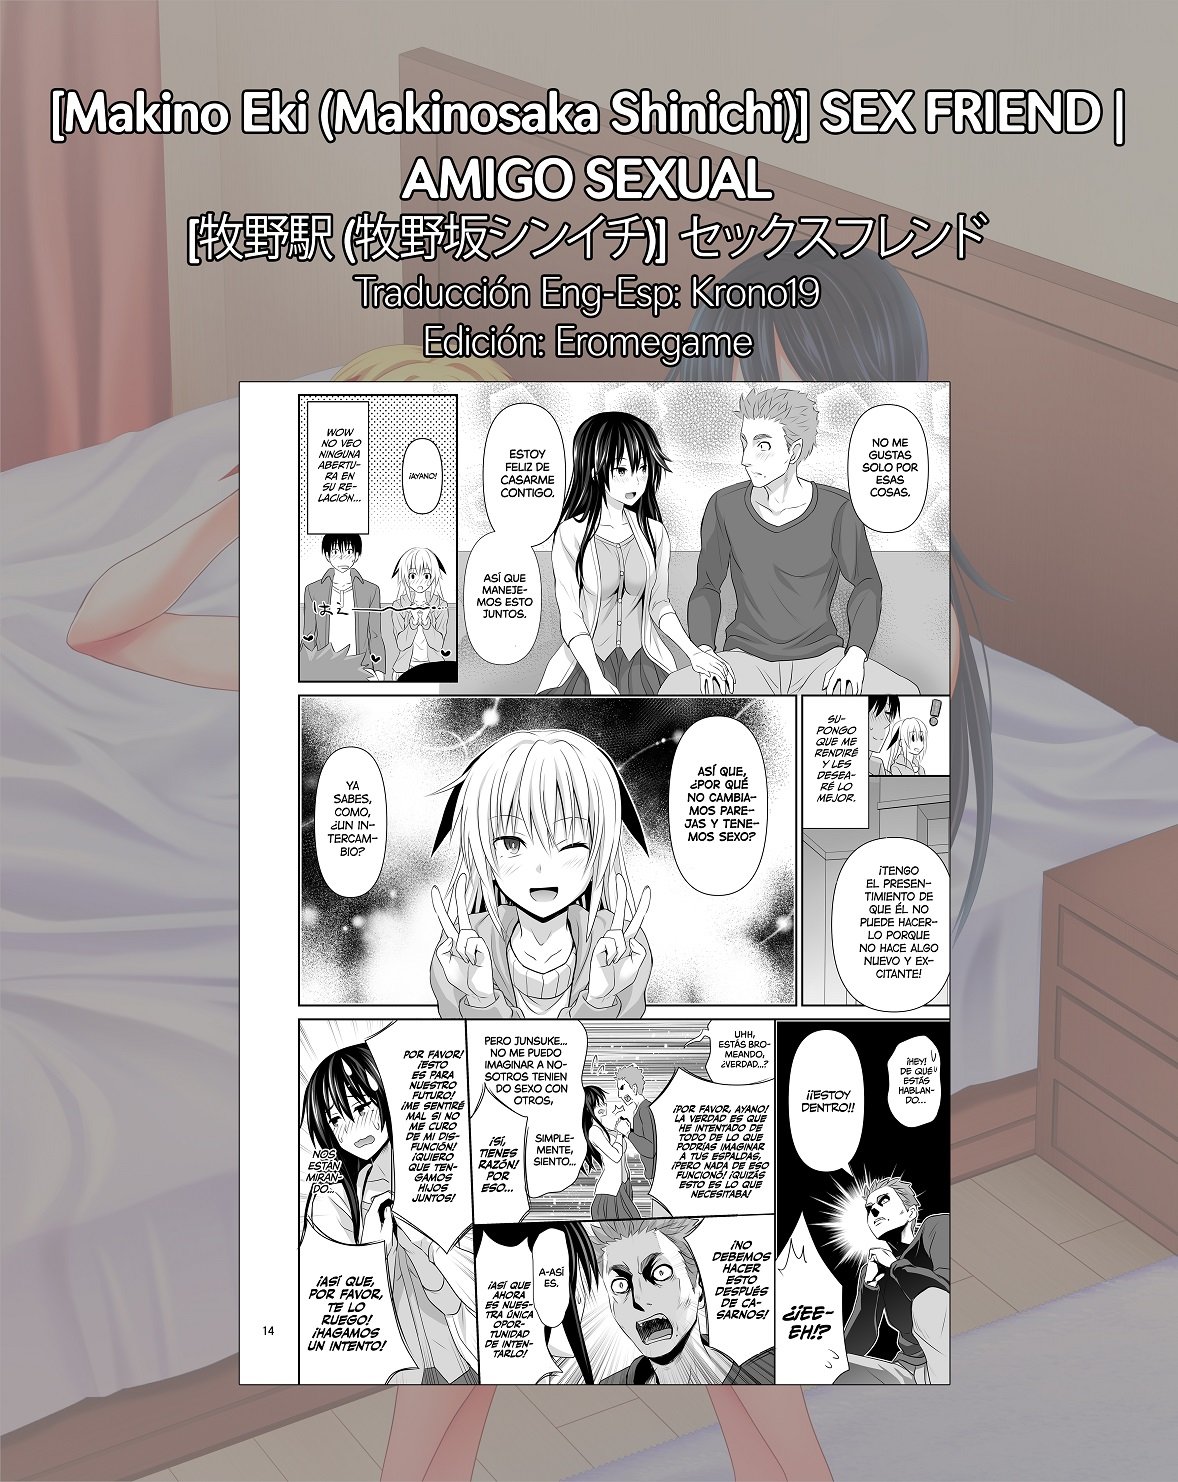 SEX FRIEND | AMIGO SEXUAL - 44